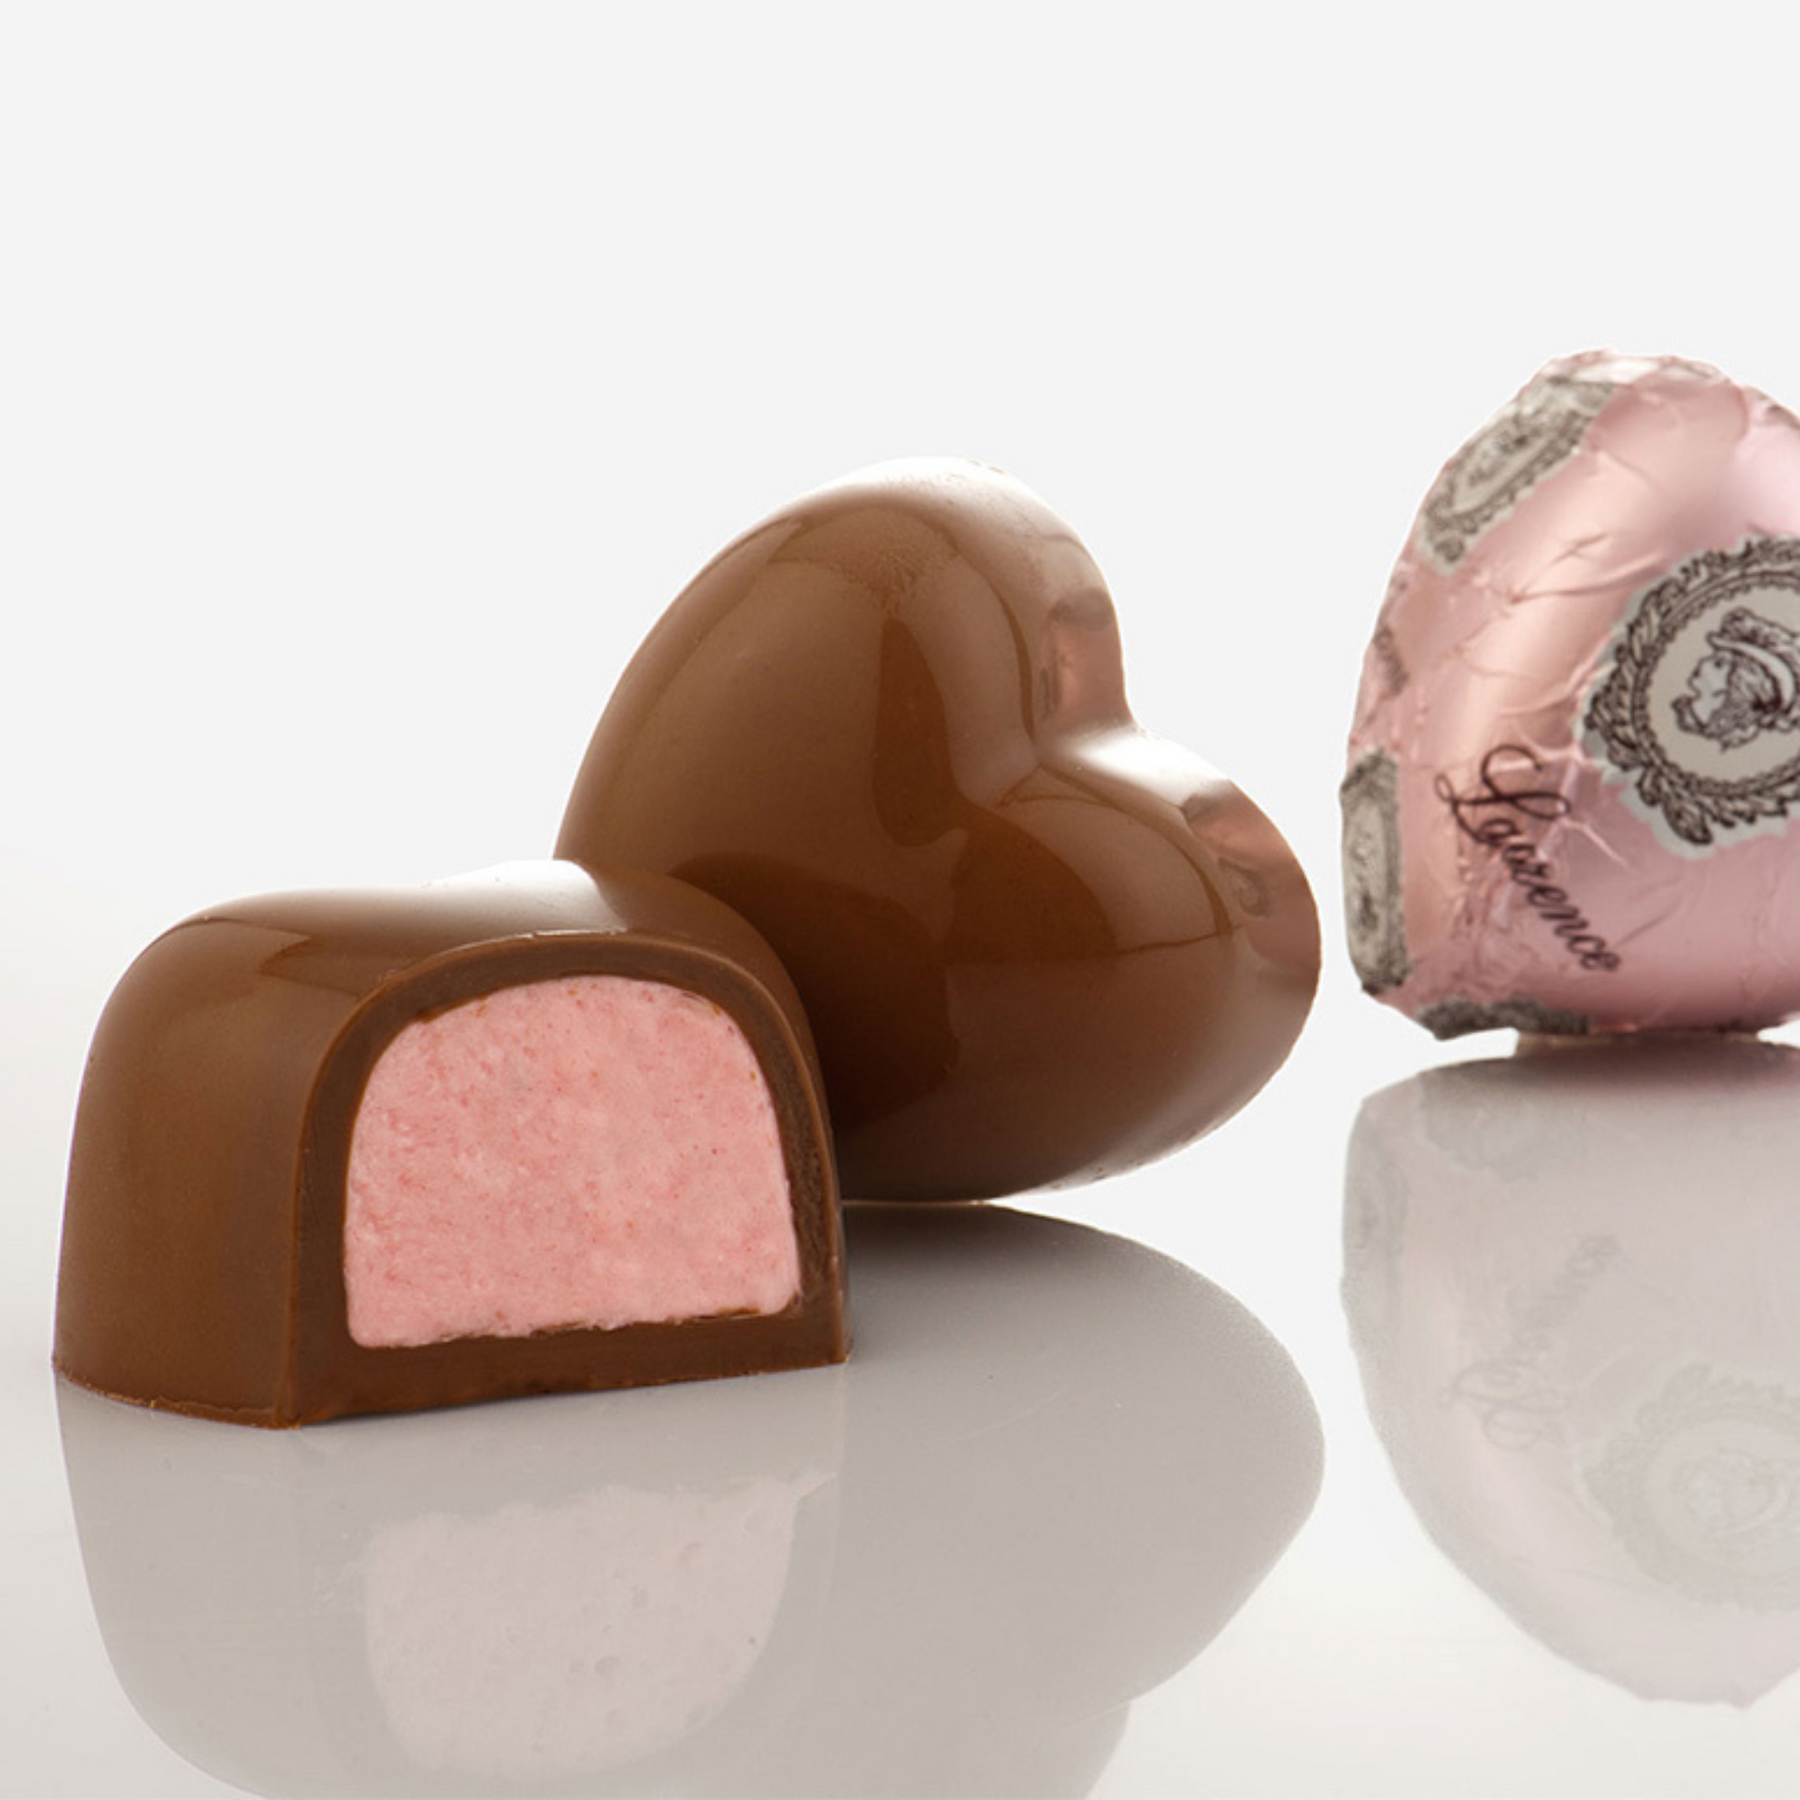 Цукерки з молочного шоколаду з полуничним суфле/Laurence Strawberry heart, 5 шт (≈165 г)